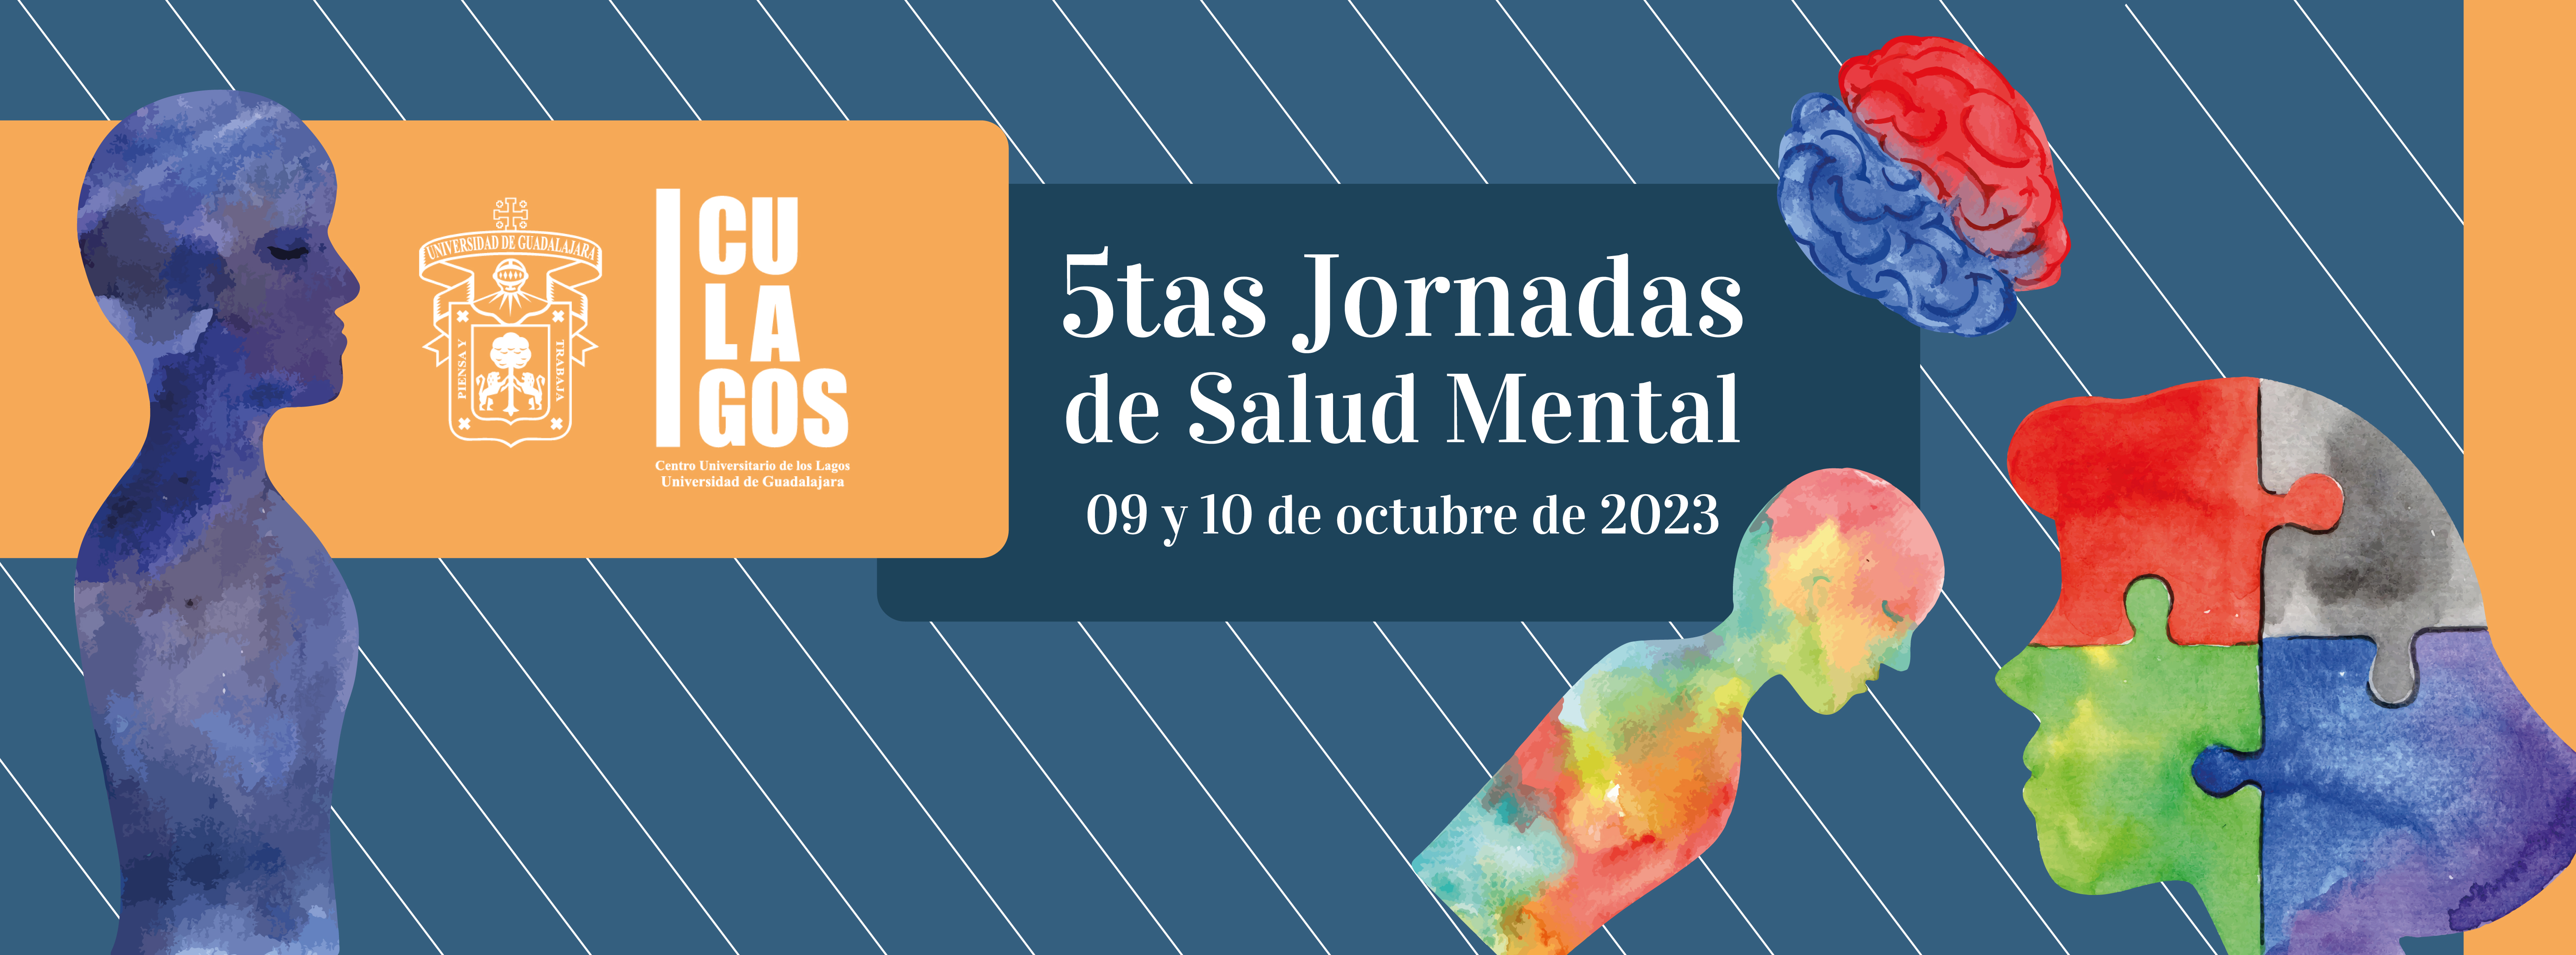 5tas Jornadas de Salud Mental